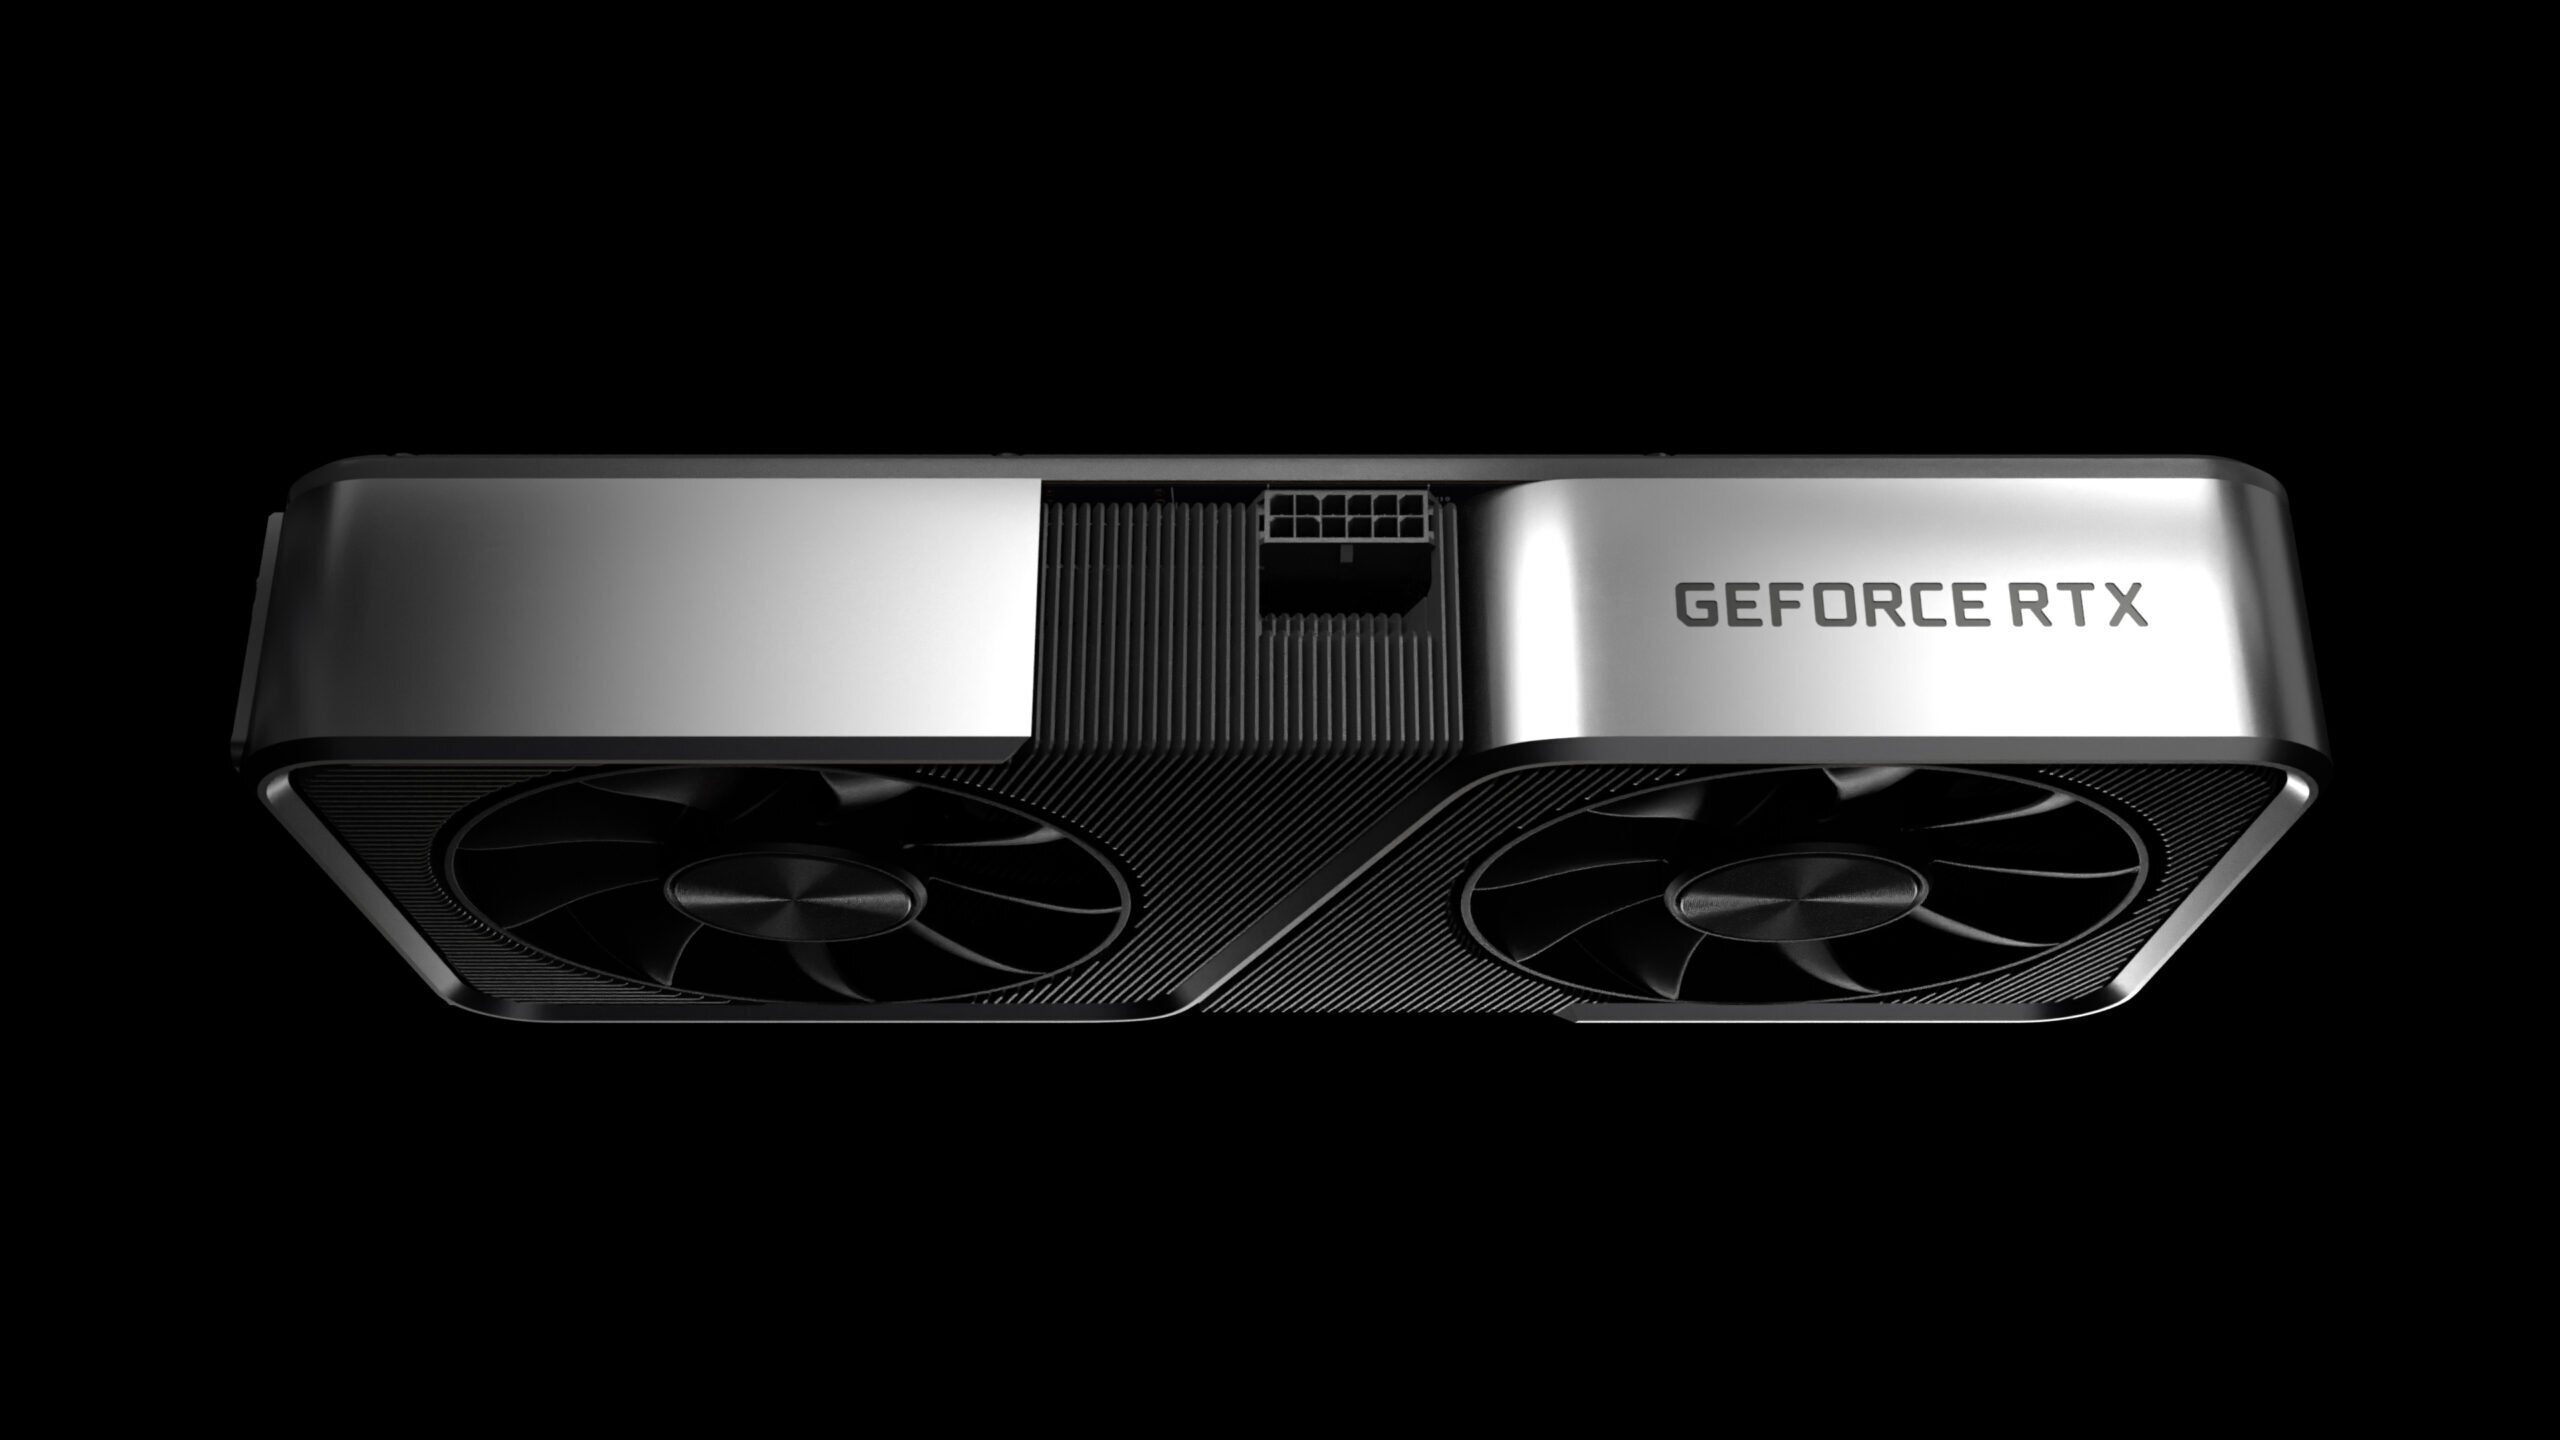 Nvidia's GeForce RTX 3070 graphics card. (Credit: Nvidia)